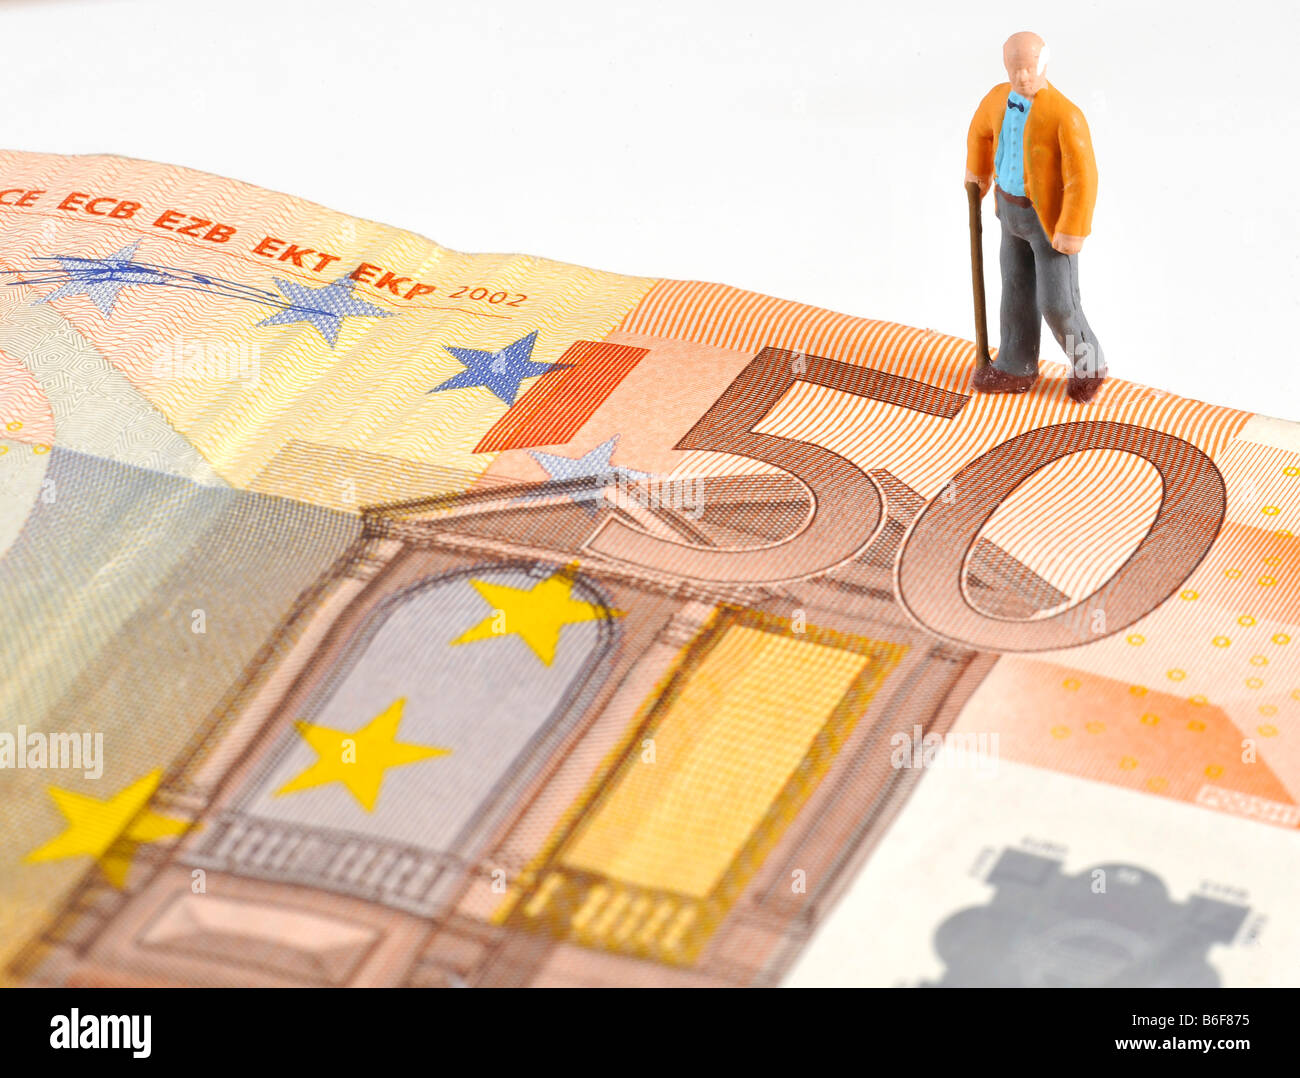 Senior citizen figure walking over a 50 Euro bank note, symbolizing retirement Stock Photo